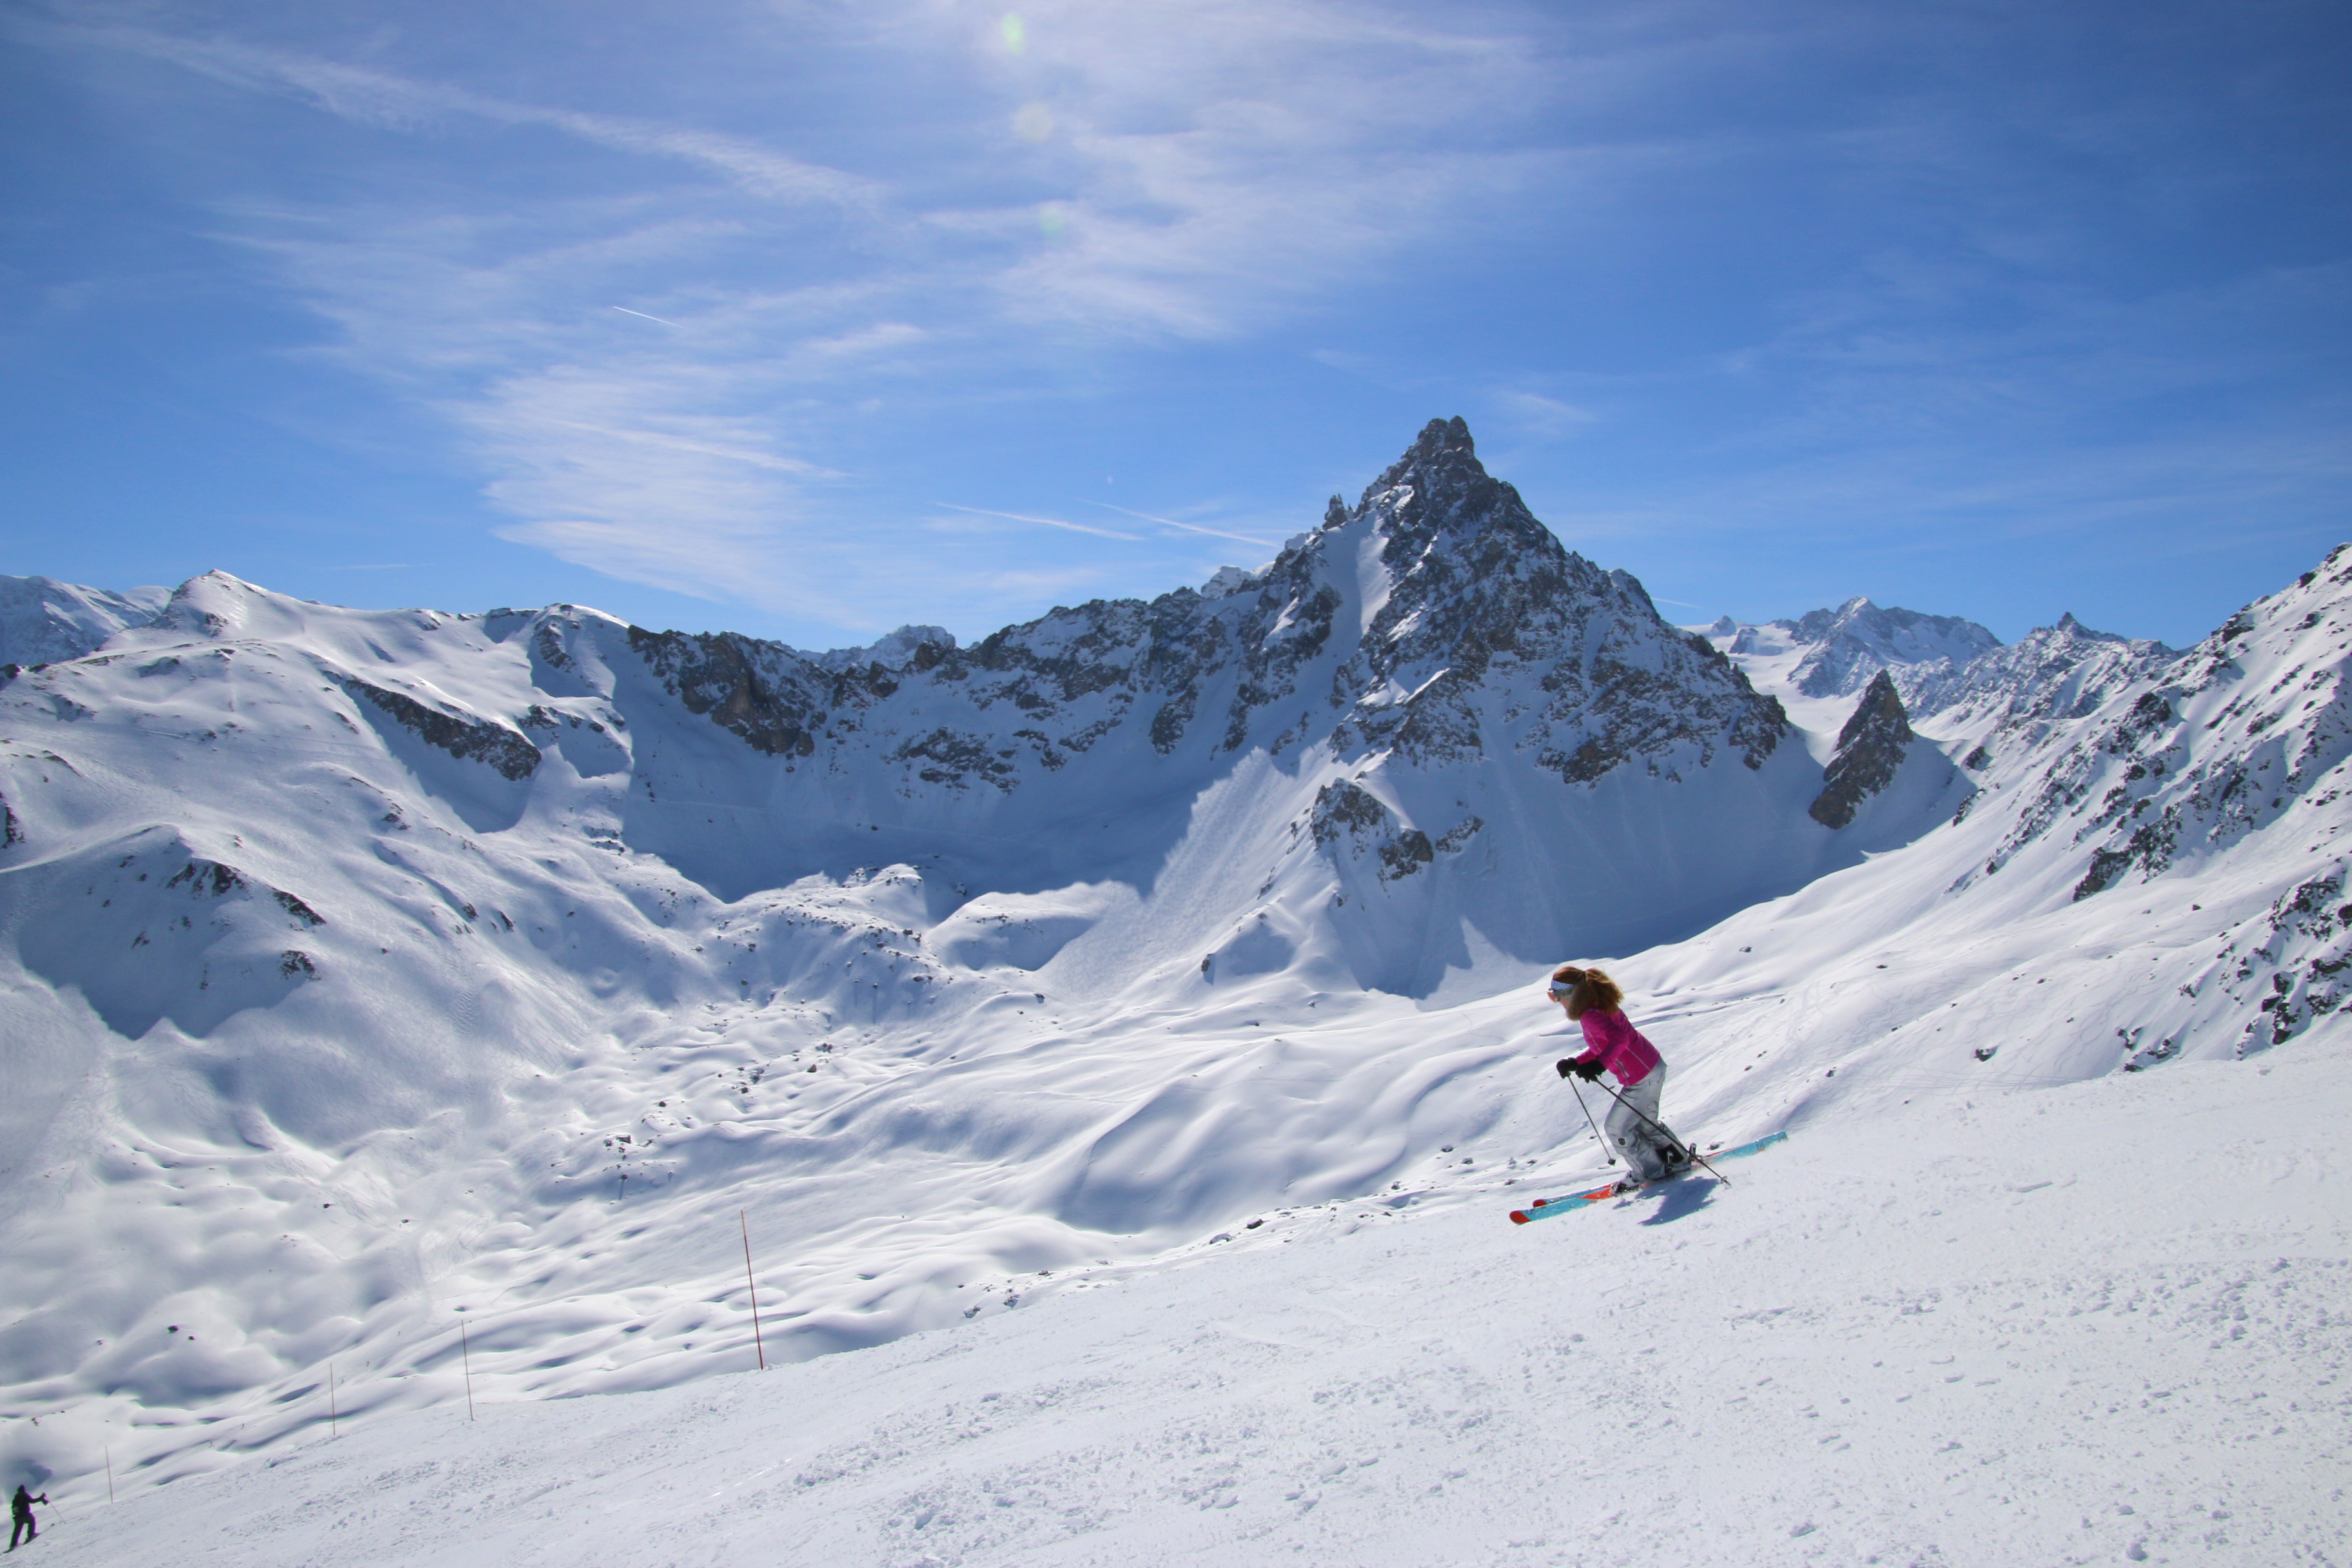 Ski touring  Ski resort Alps : Les 2 Alpes tourist office, ski vacations  and mountain ski resort stay